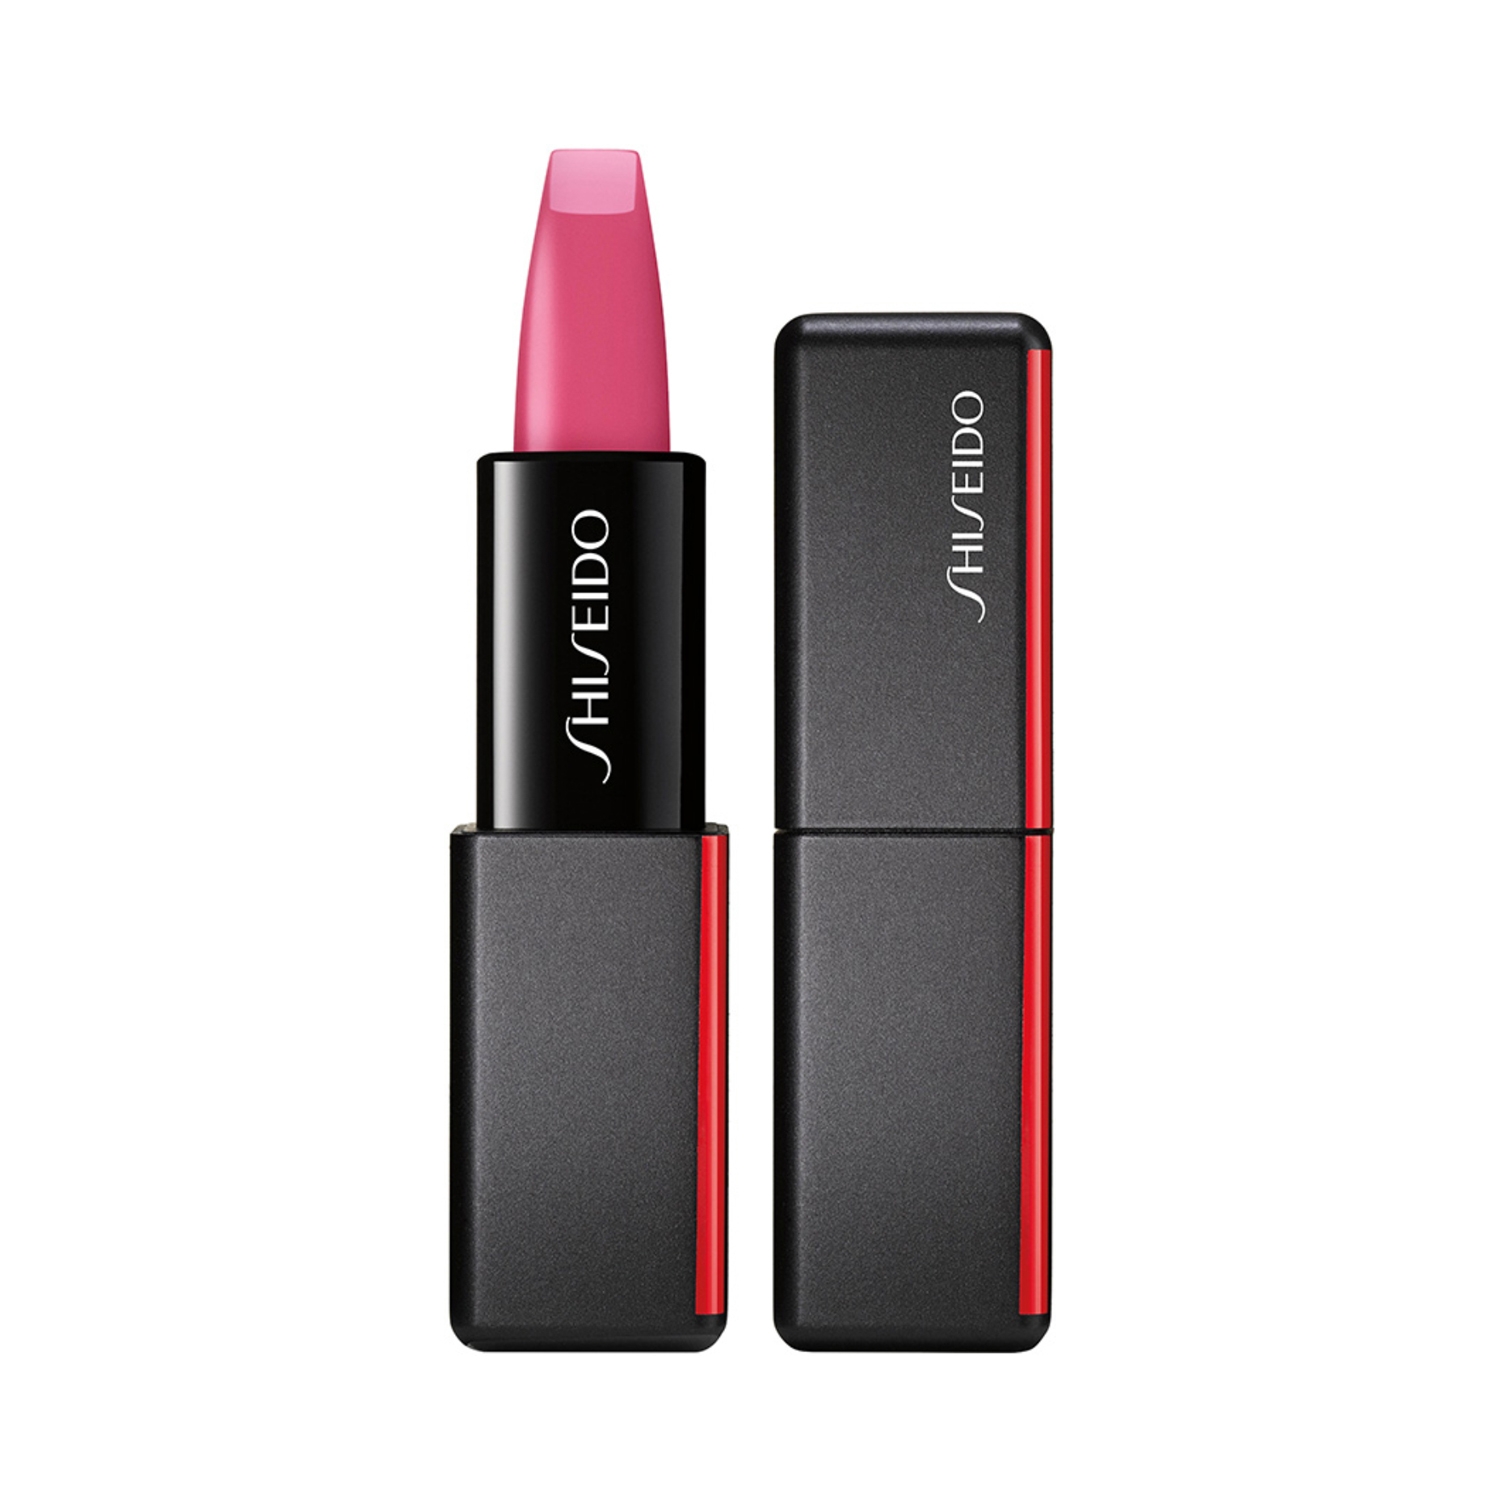 Shiseido Modern Matte Powder Lipstick - 517 Rose Hip (4g)